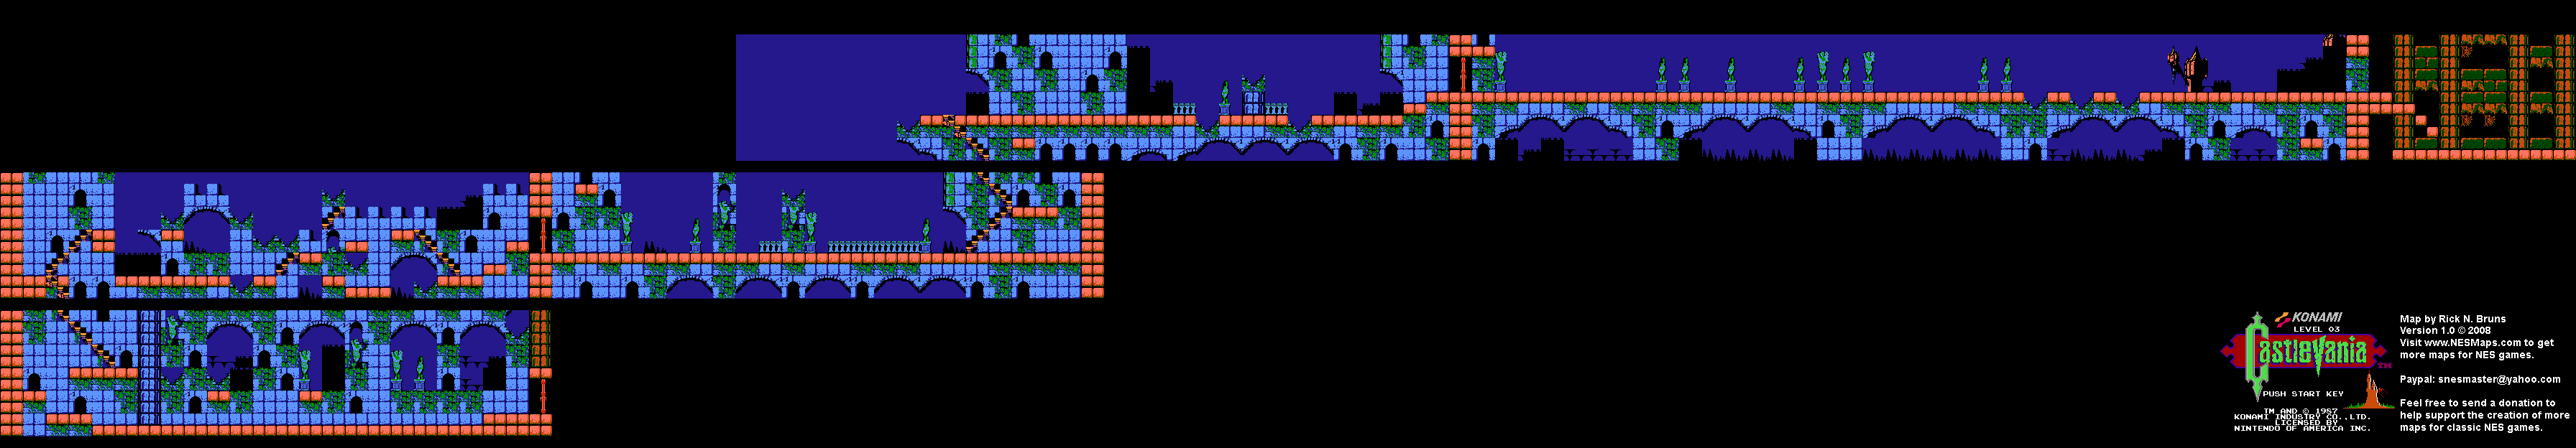 Castlevania 3 Nintendo NES Background Only Map